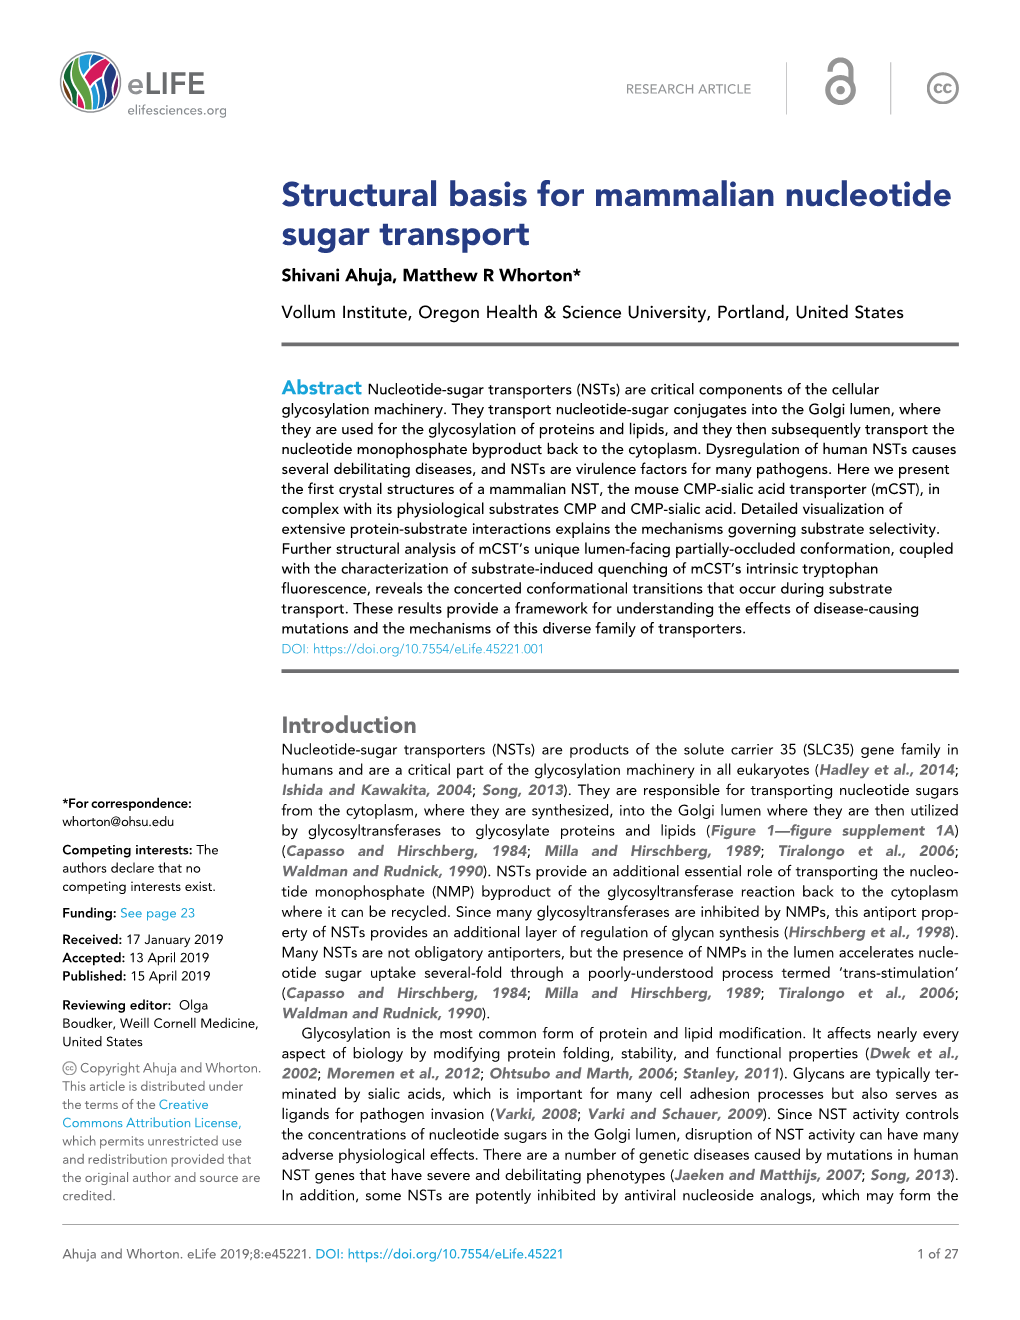 Structural Basis for Mammalian Nucleotide Sugar Transport Shivani Ahuja, Matthew R Whorton*